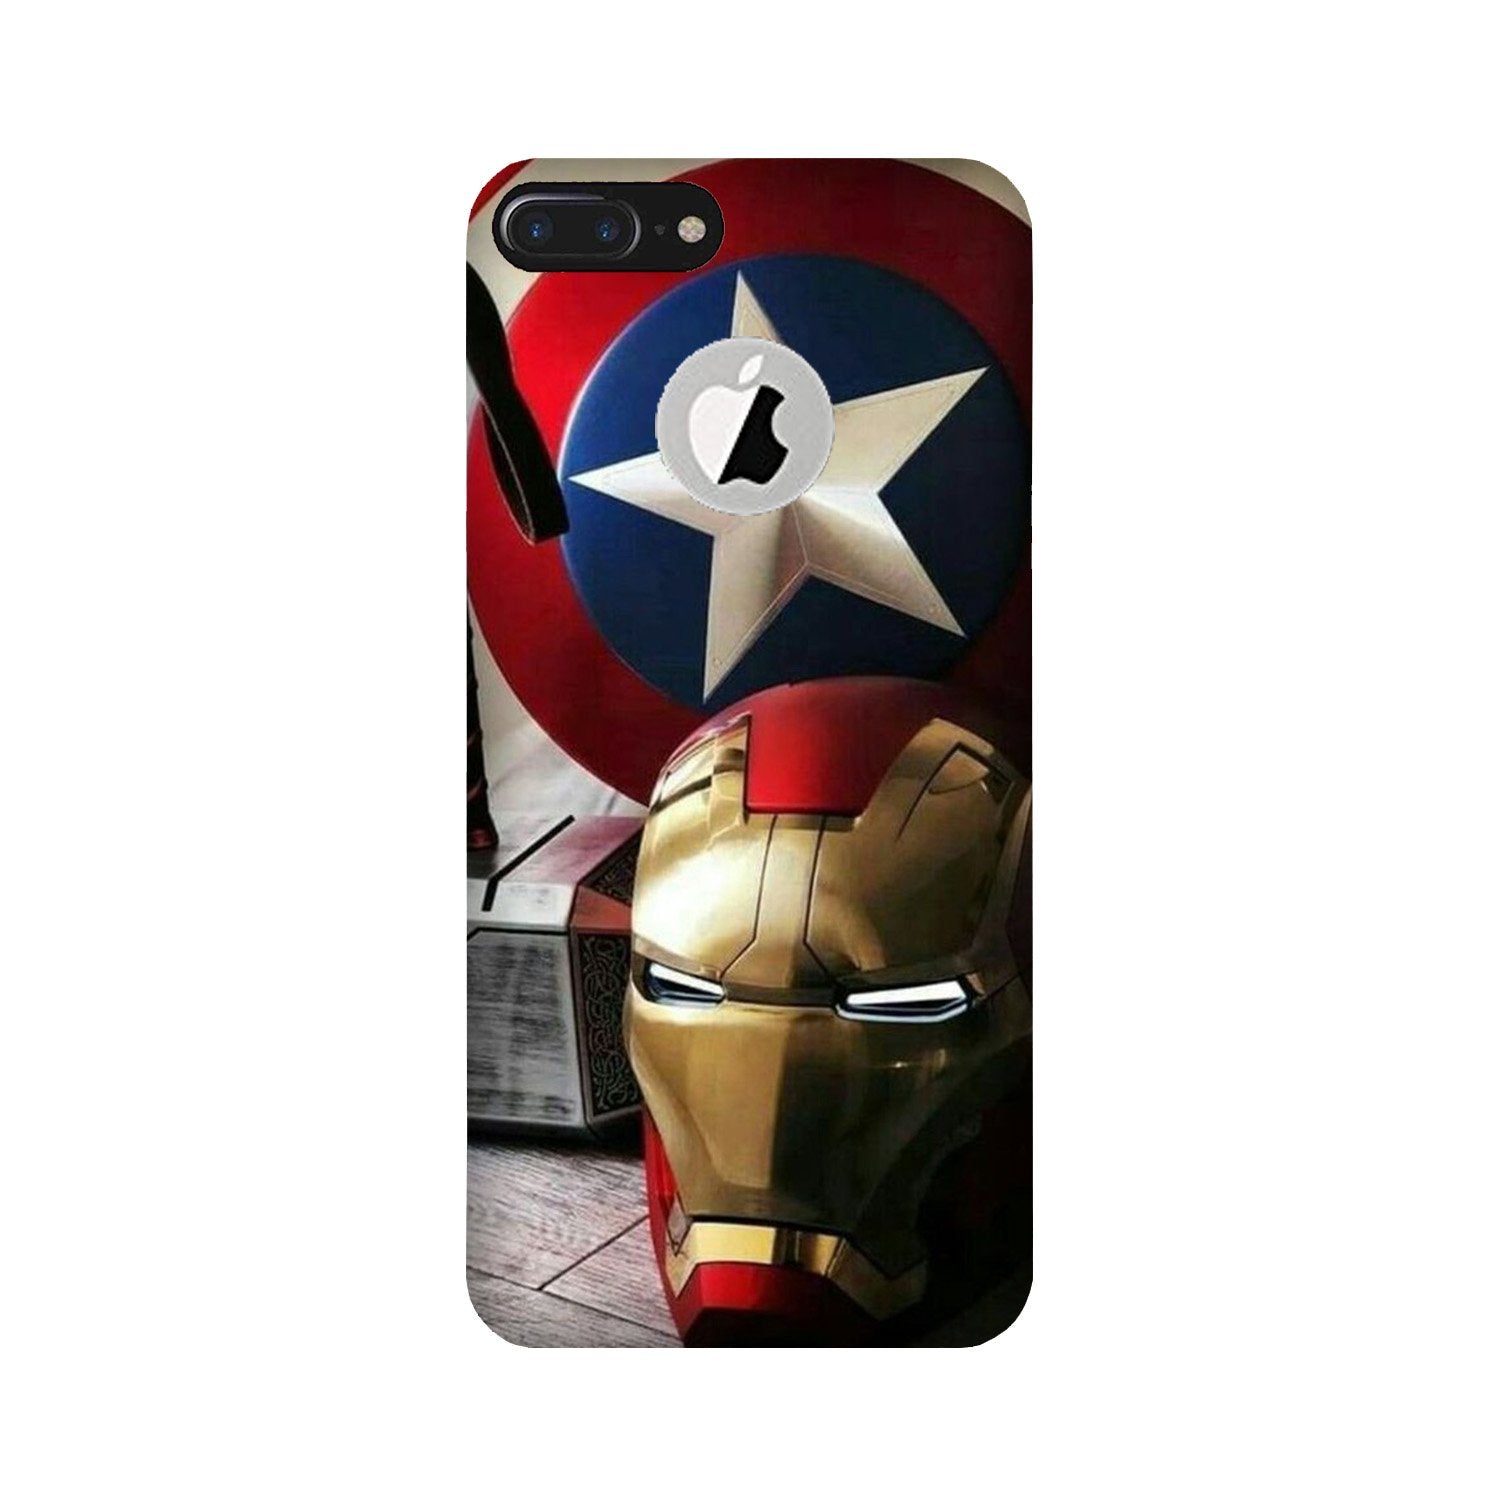 Ironman Captain America Case for iPhone 7 Plus logo cut (Design No. 254)